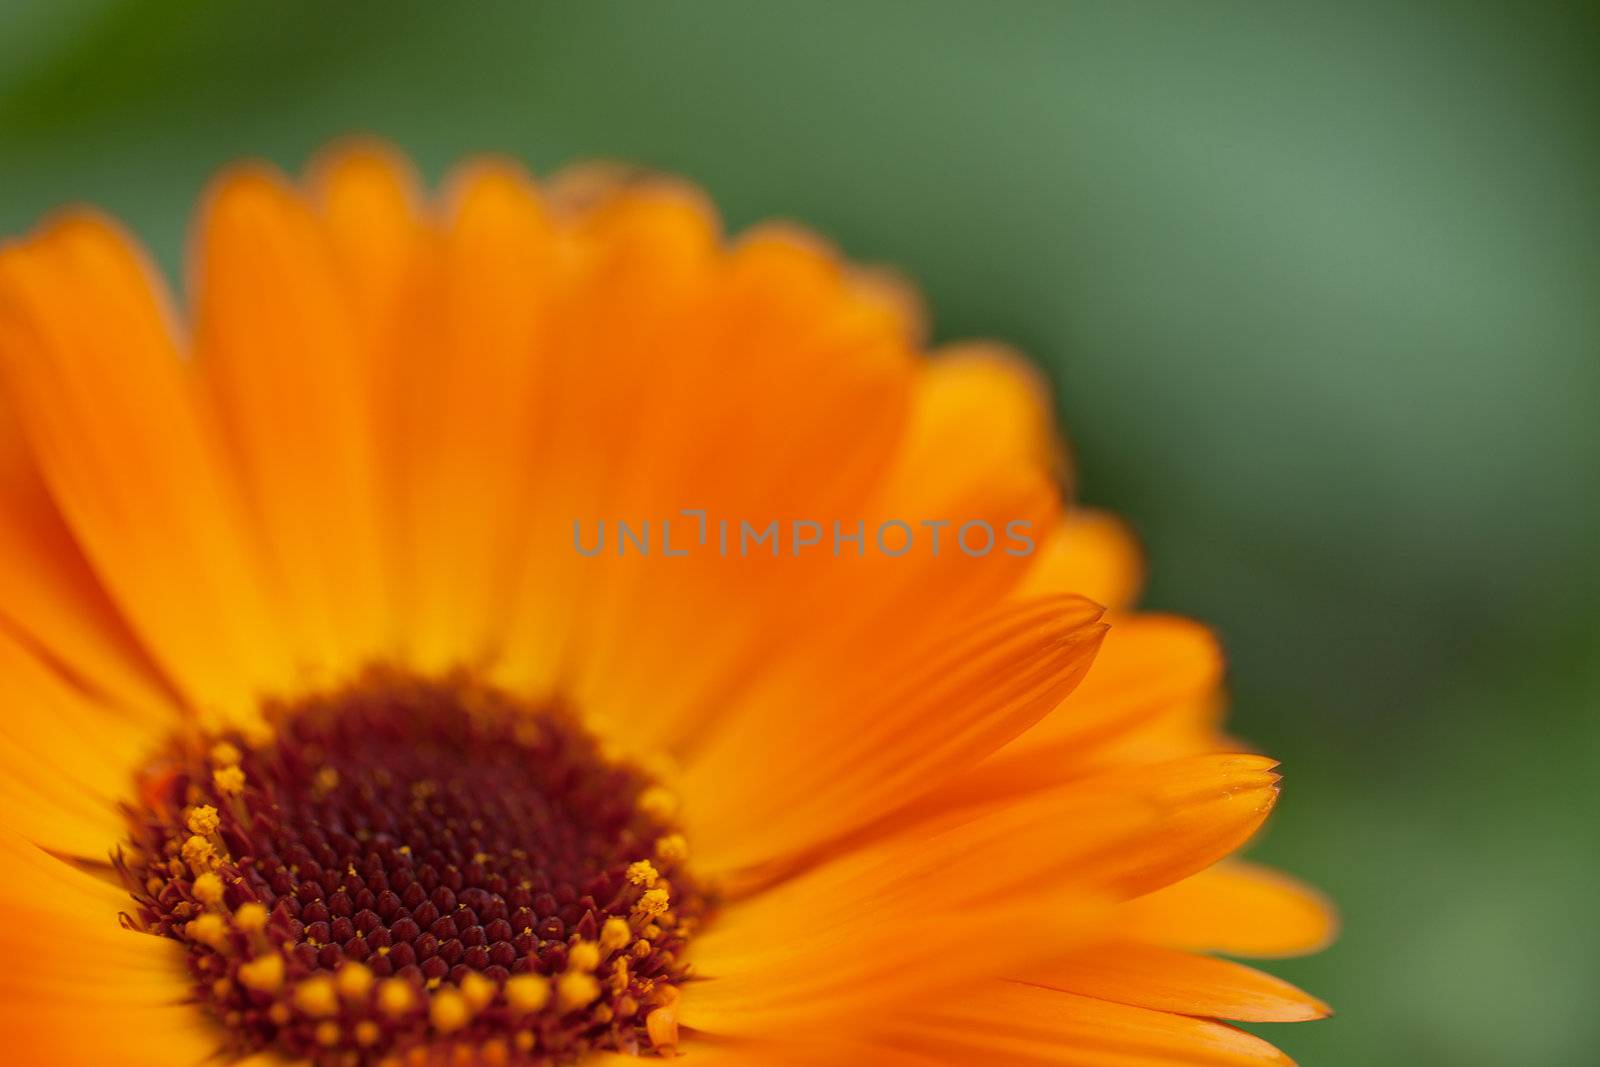 Orange flower on a green background - close-up